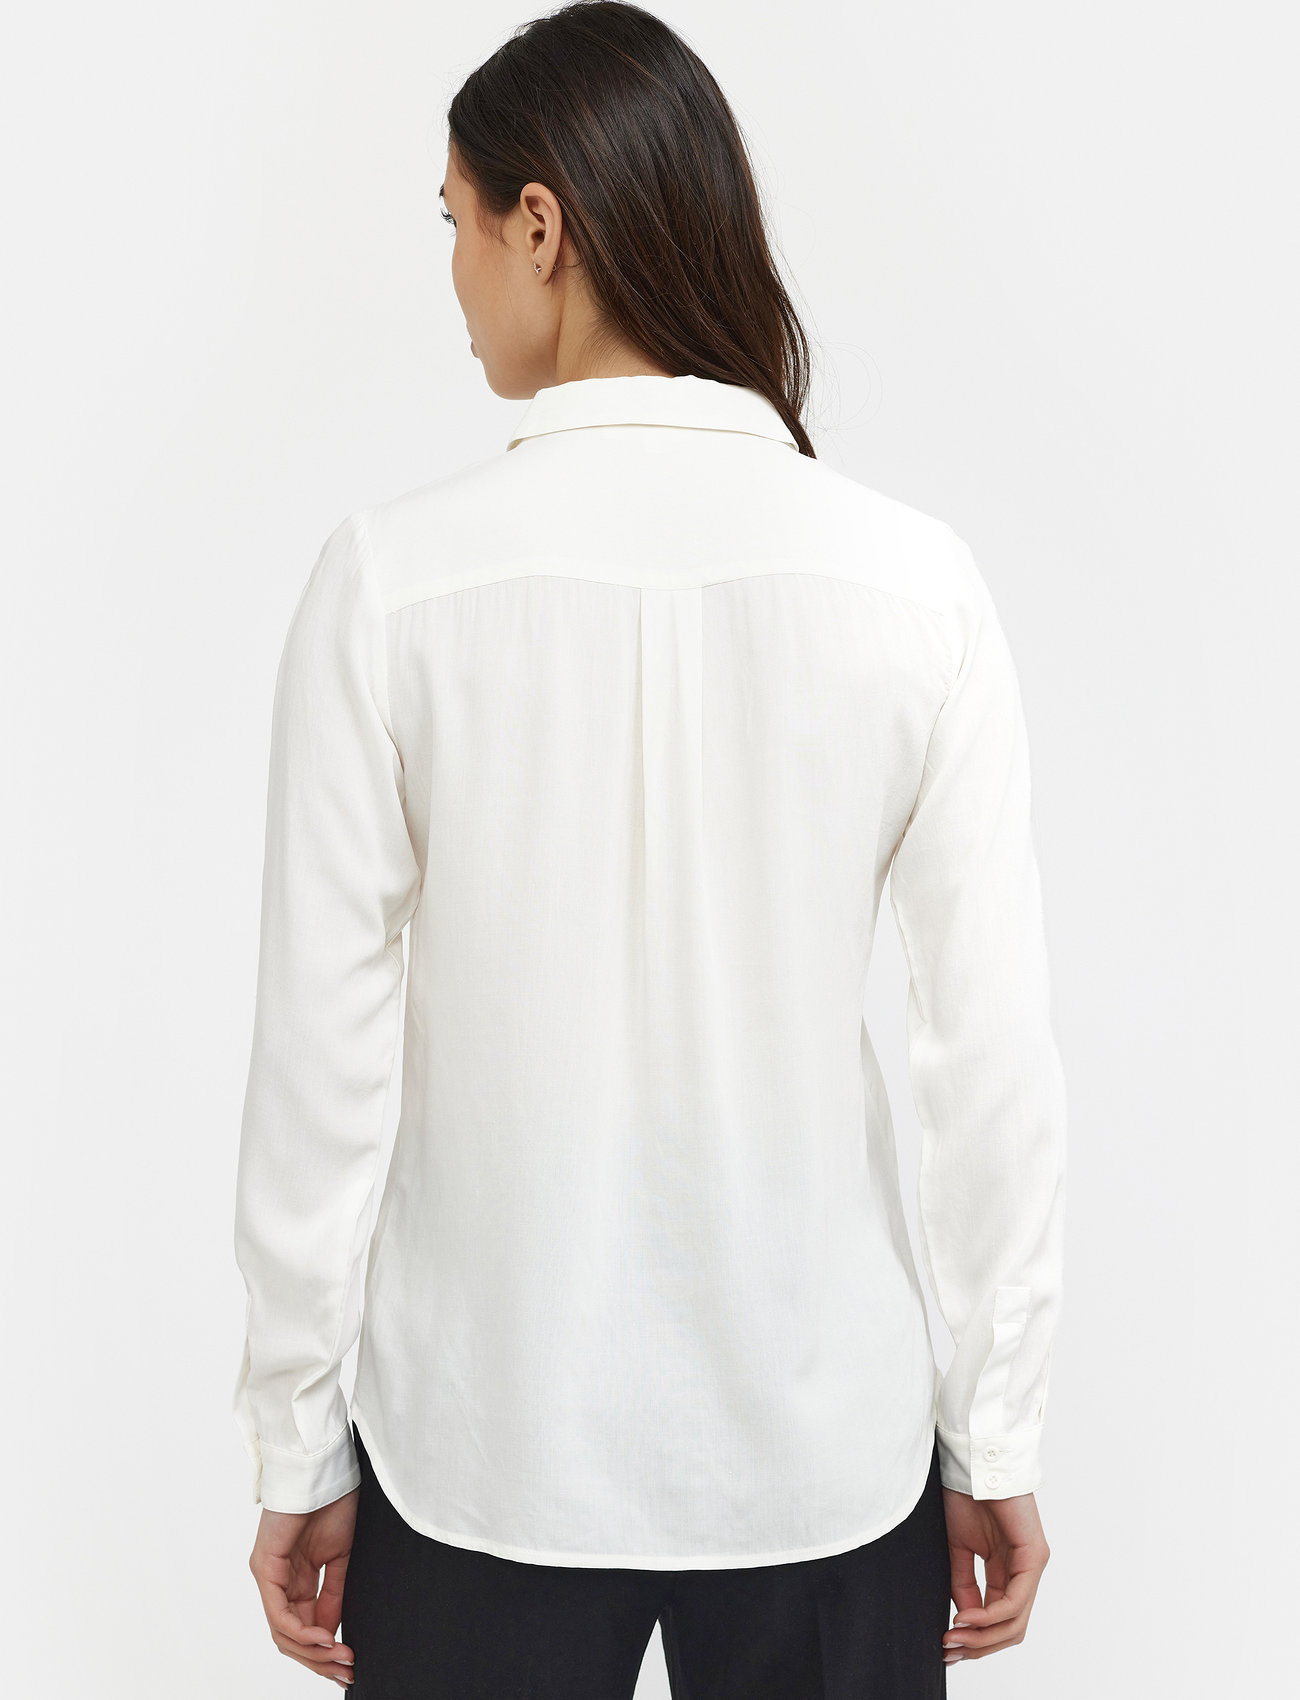 Soft Rebels - SRFreedom LS Shirt - chemises à manches longues - snow white / off white - 3